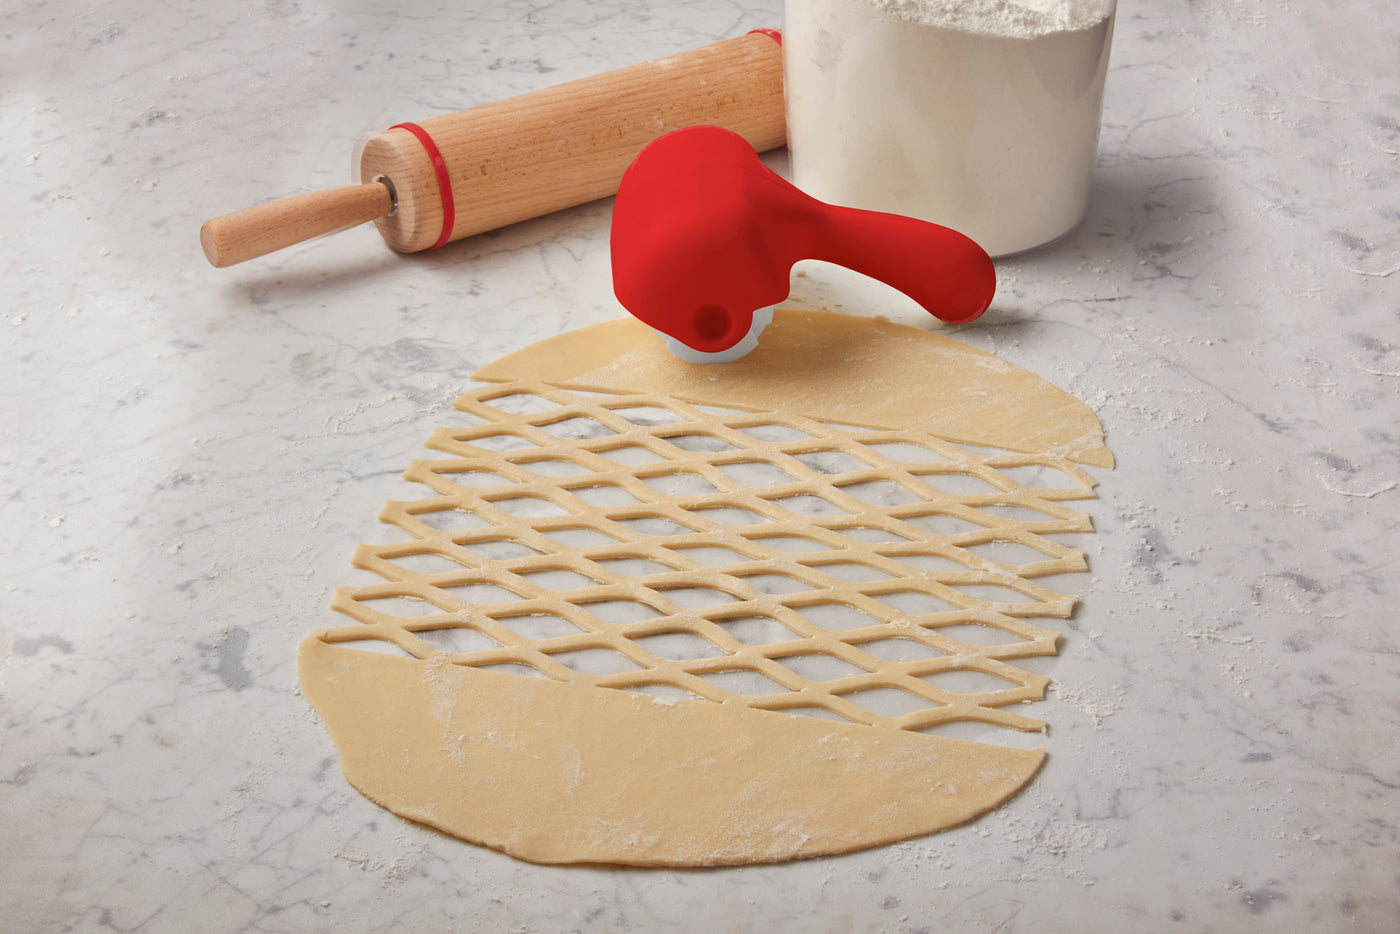 Pastry Dough Cutter – Talisman Designs